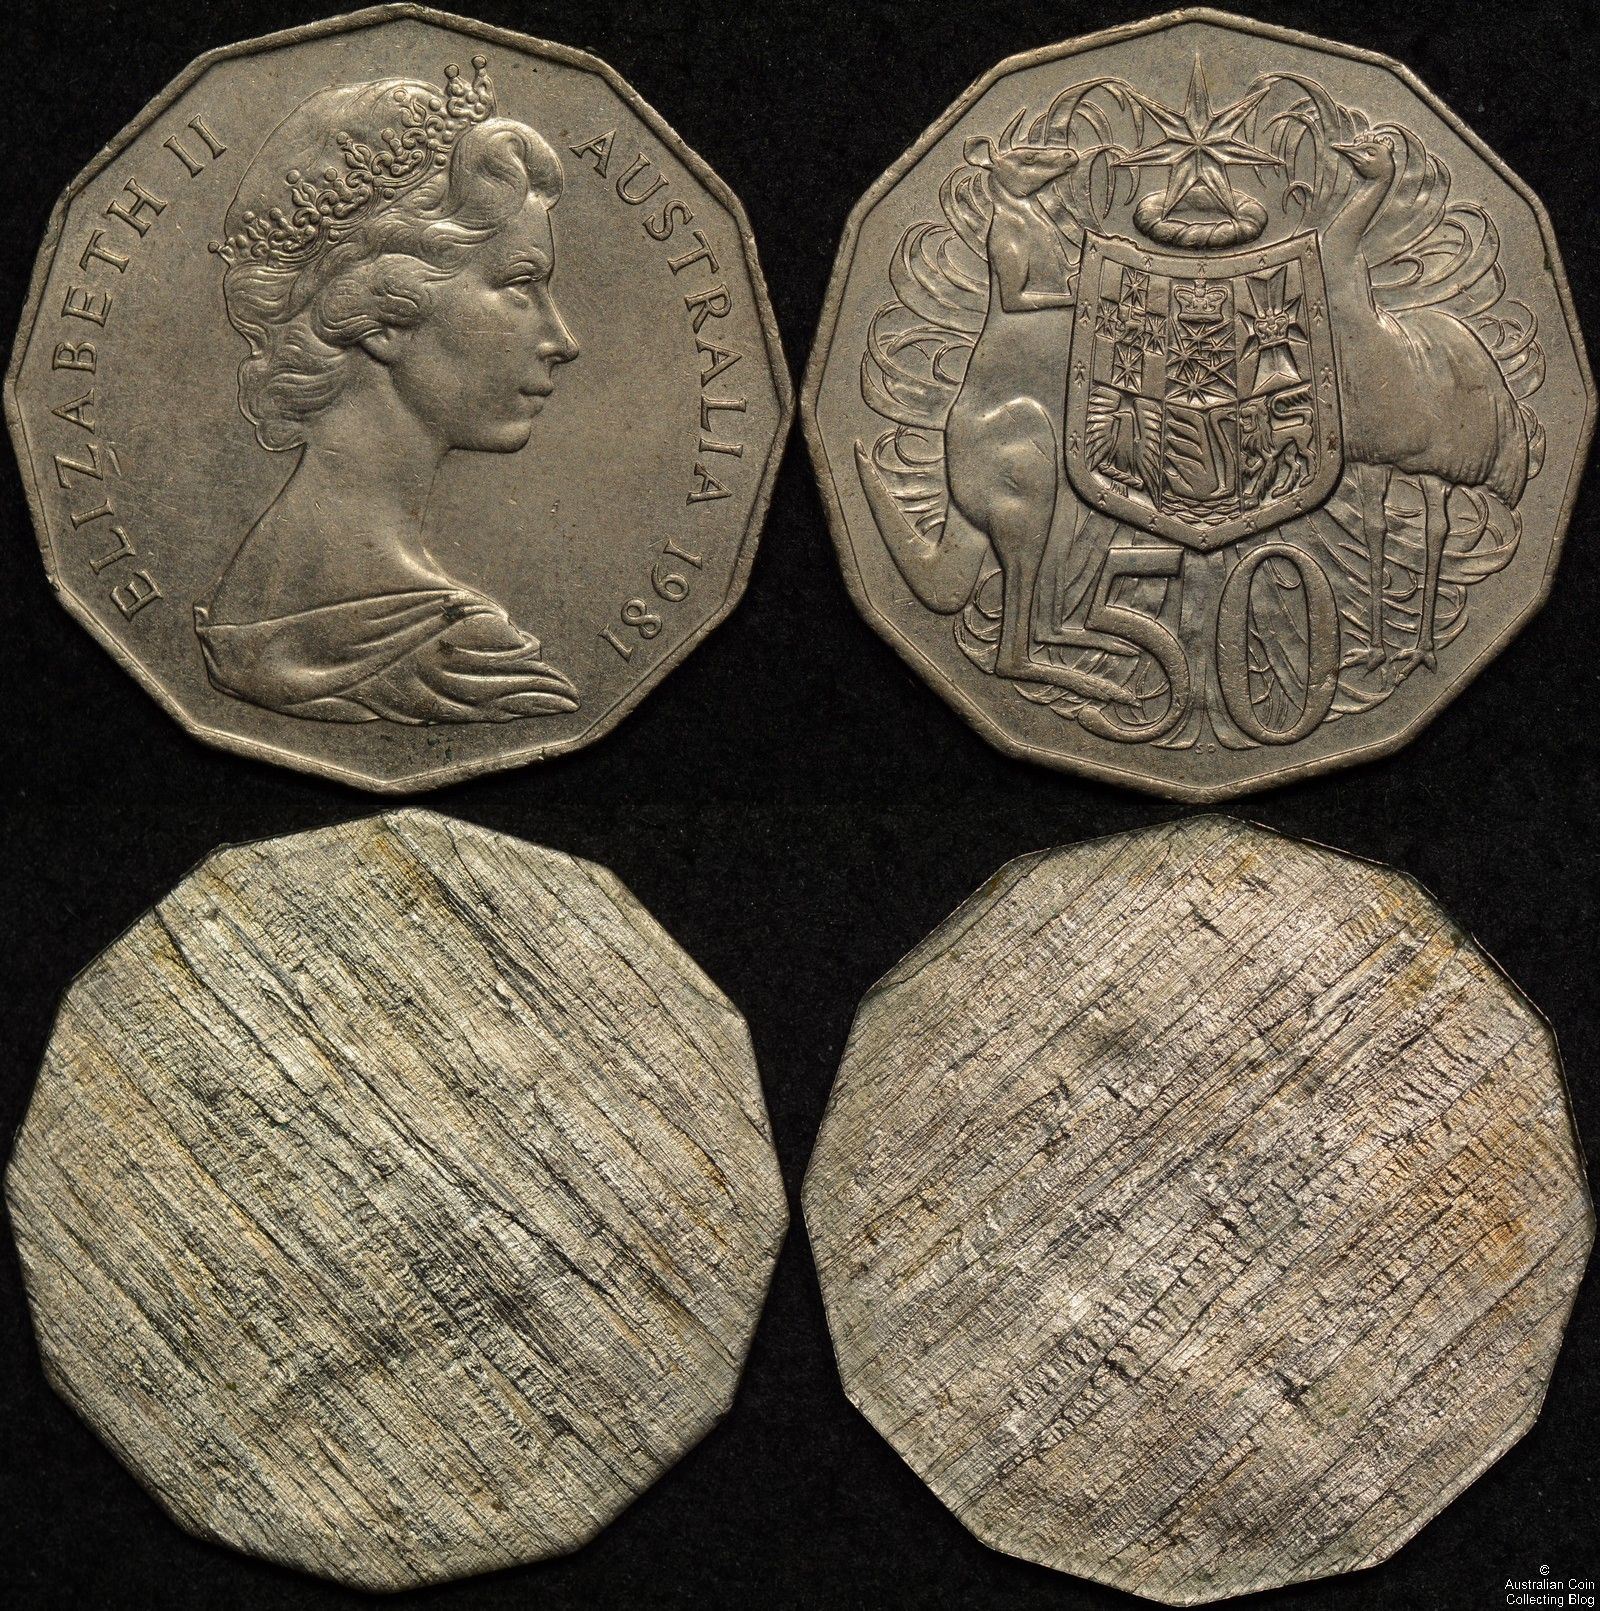 Australian 1981 50 cent Split Planchet Mated Pair -this coin split after it was struck.